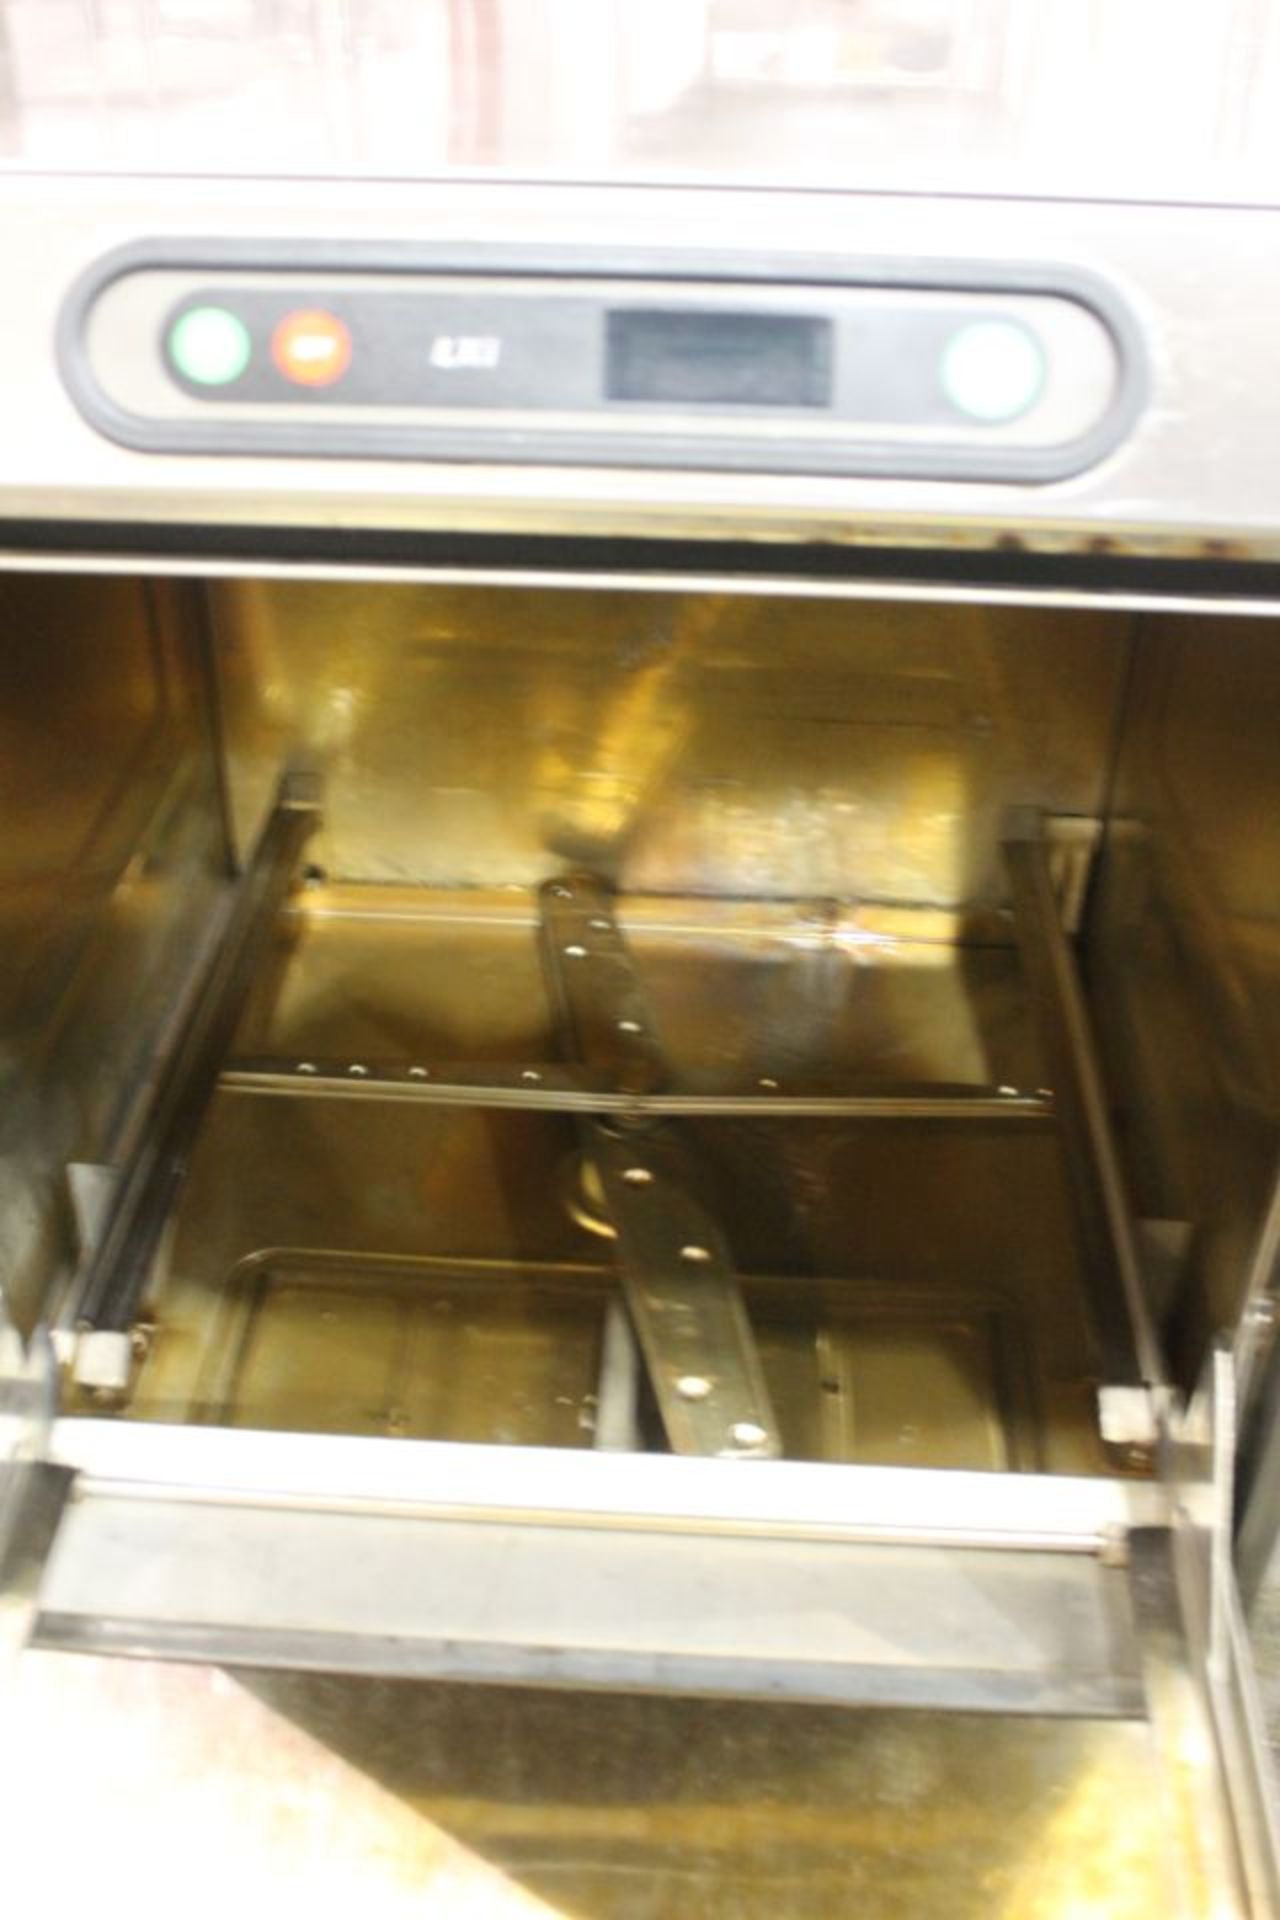 Hobart LXiC low temp dishwasher - 120v, 15.4amps - Image 2 of 5